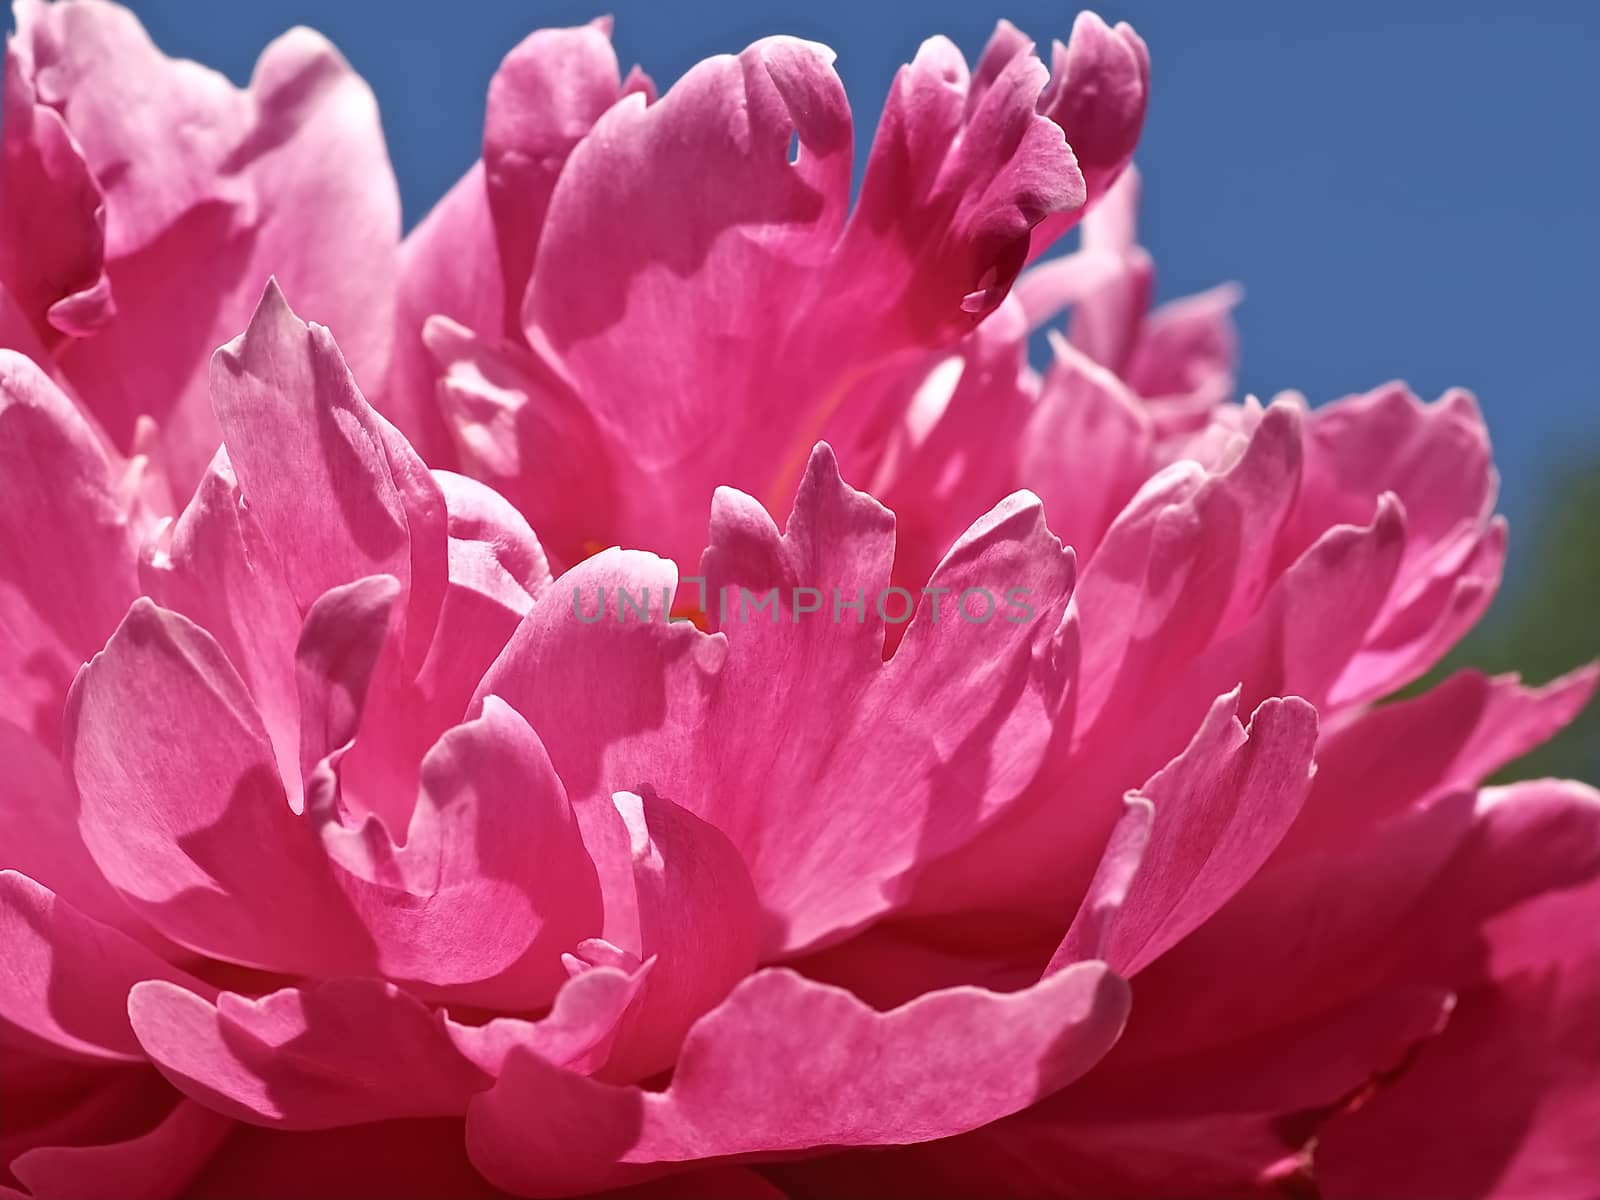 Macro of a pink peony rose flower